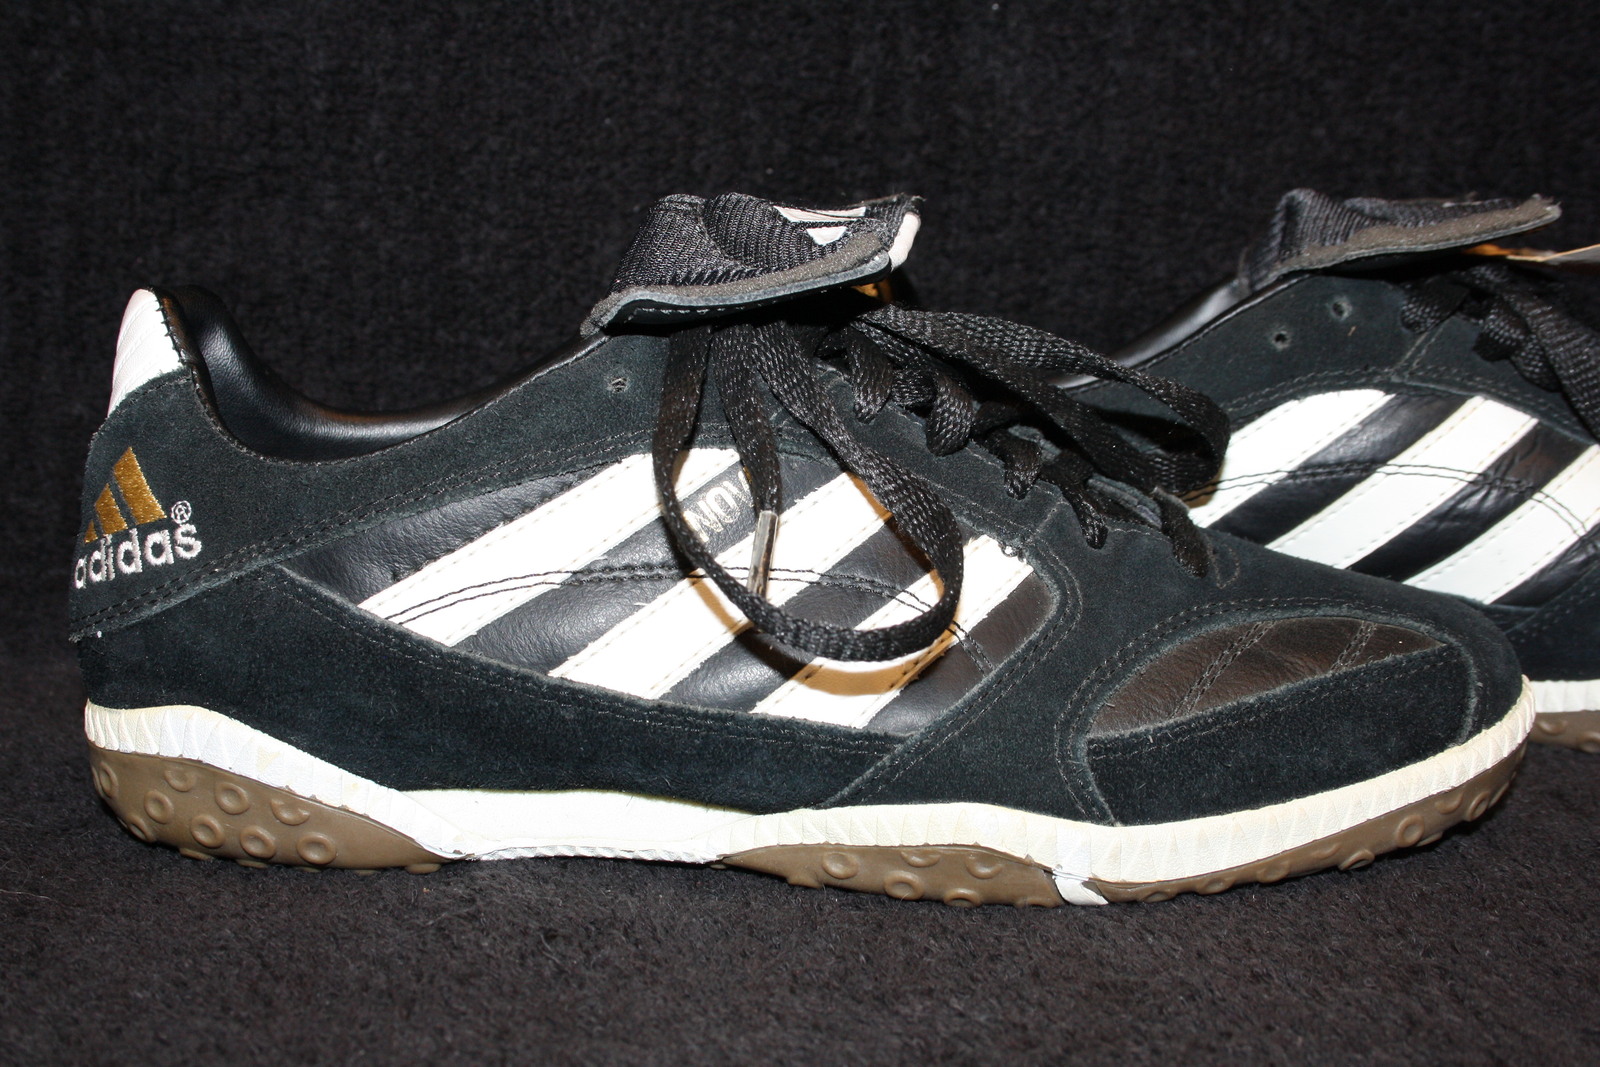 Women's Adidas Nova Soccer Shoes Vintage Size 8 EUR 40 Black NWT - Athletic